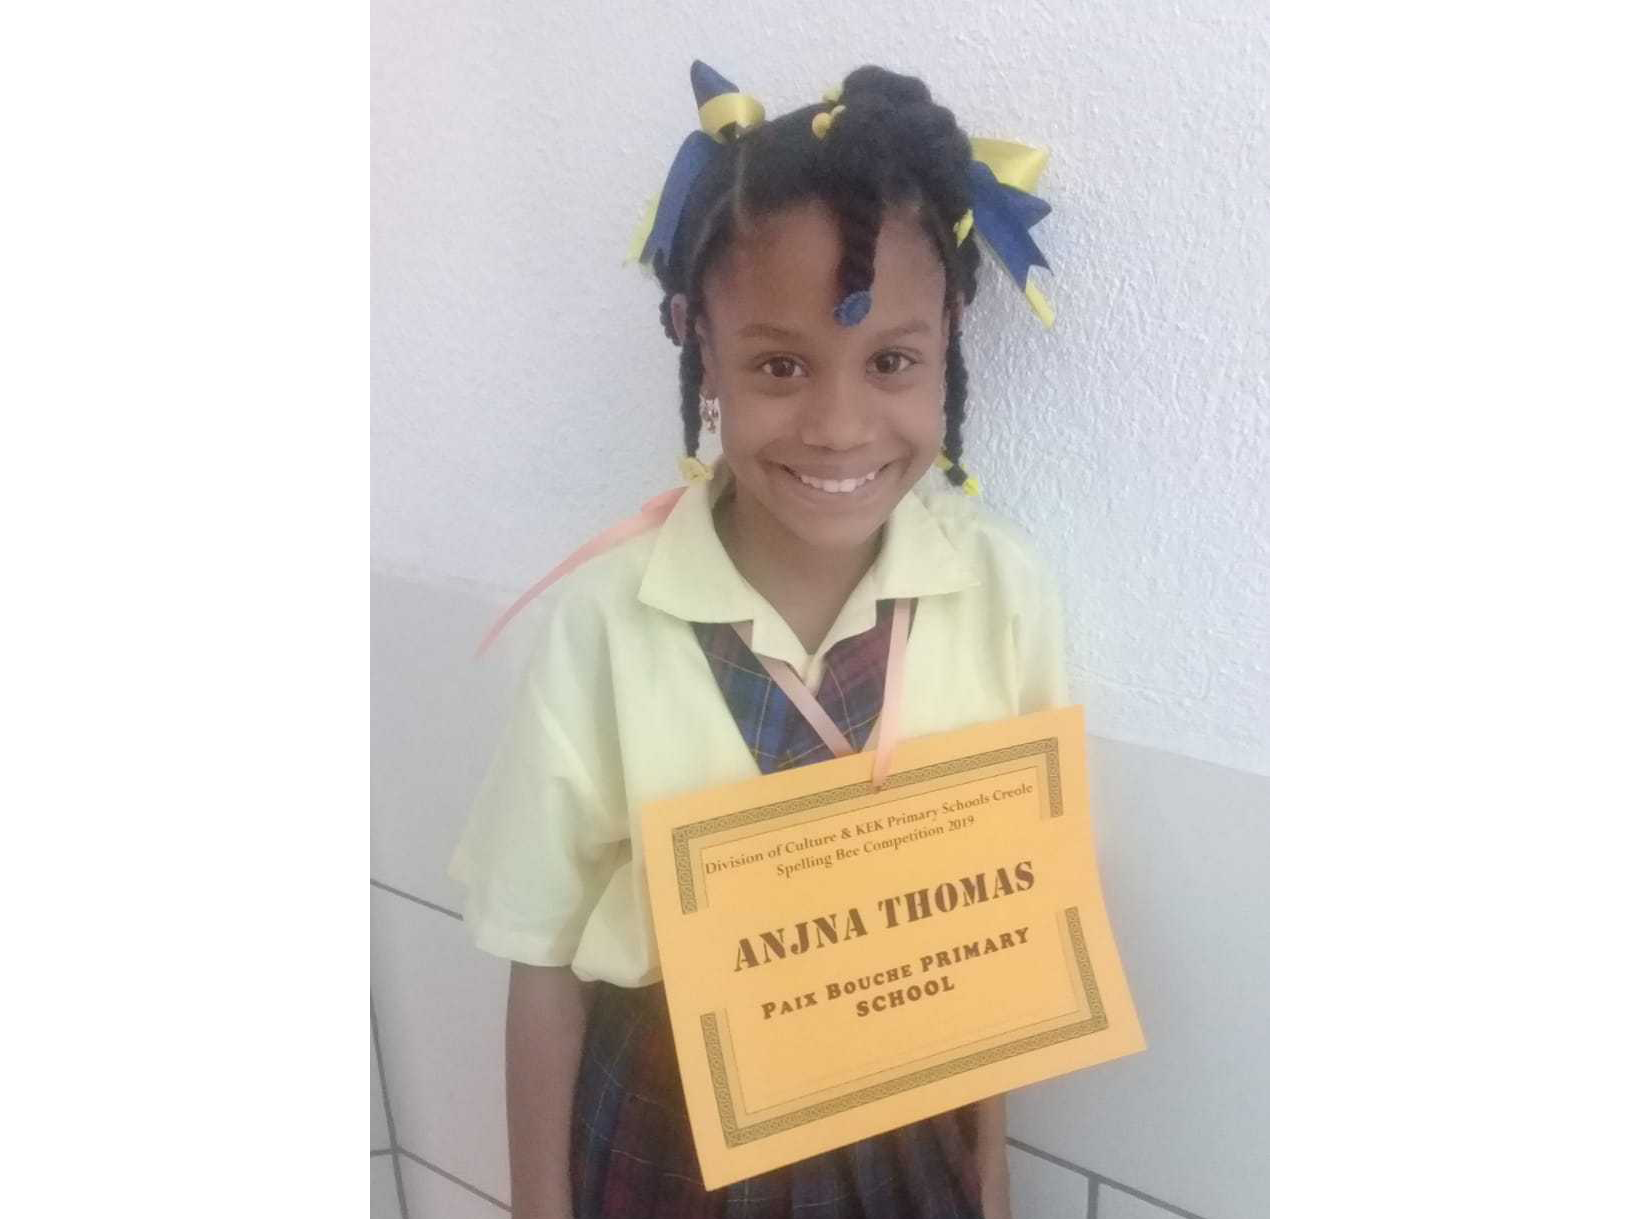 Paix Bouche Primary Remains Champion of Kweyol Spelling Bee